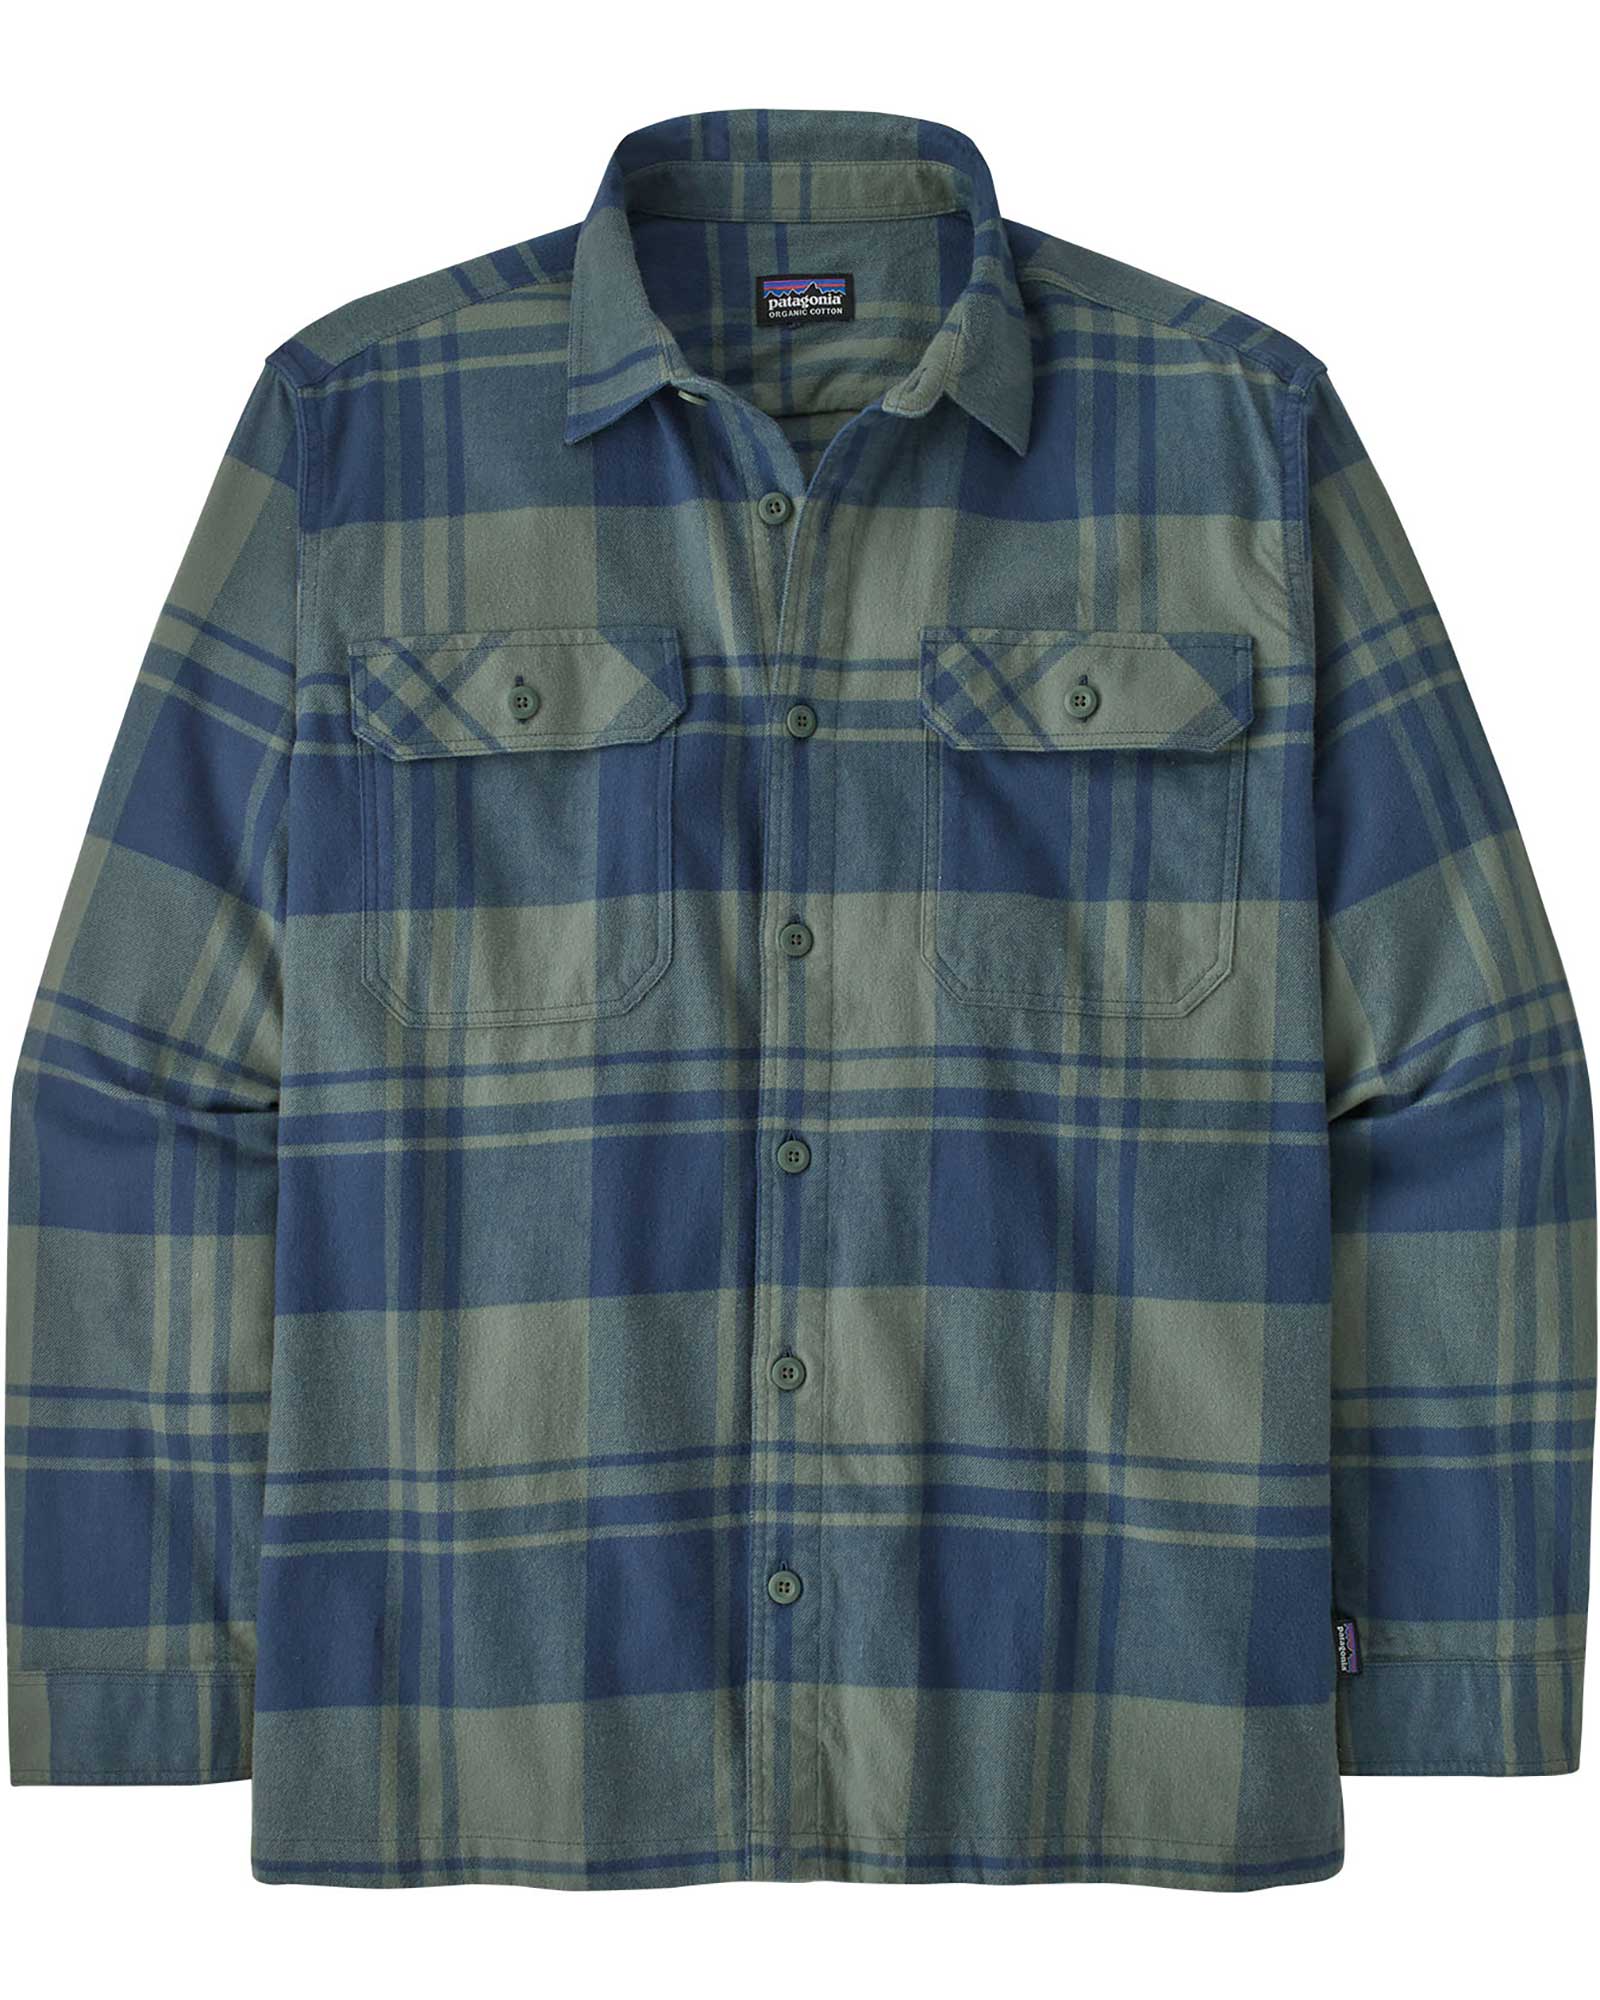 Patagonia Men’s Organic Long Sleeve Flannel Shirt - Hemlock Green/Live Oak XL